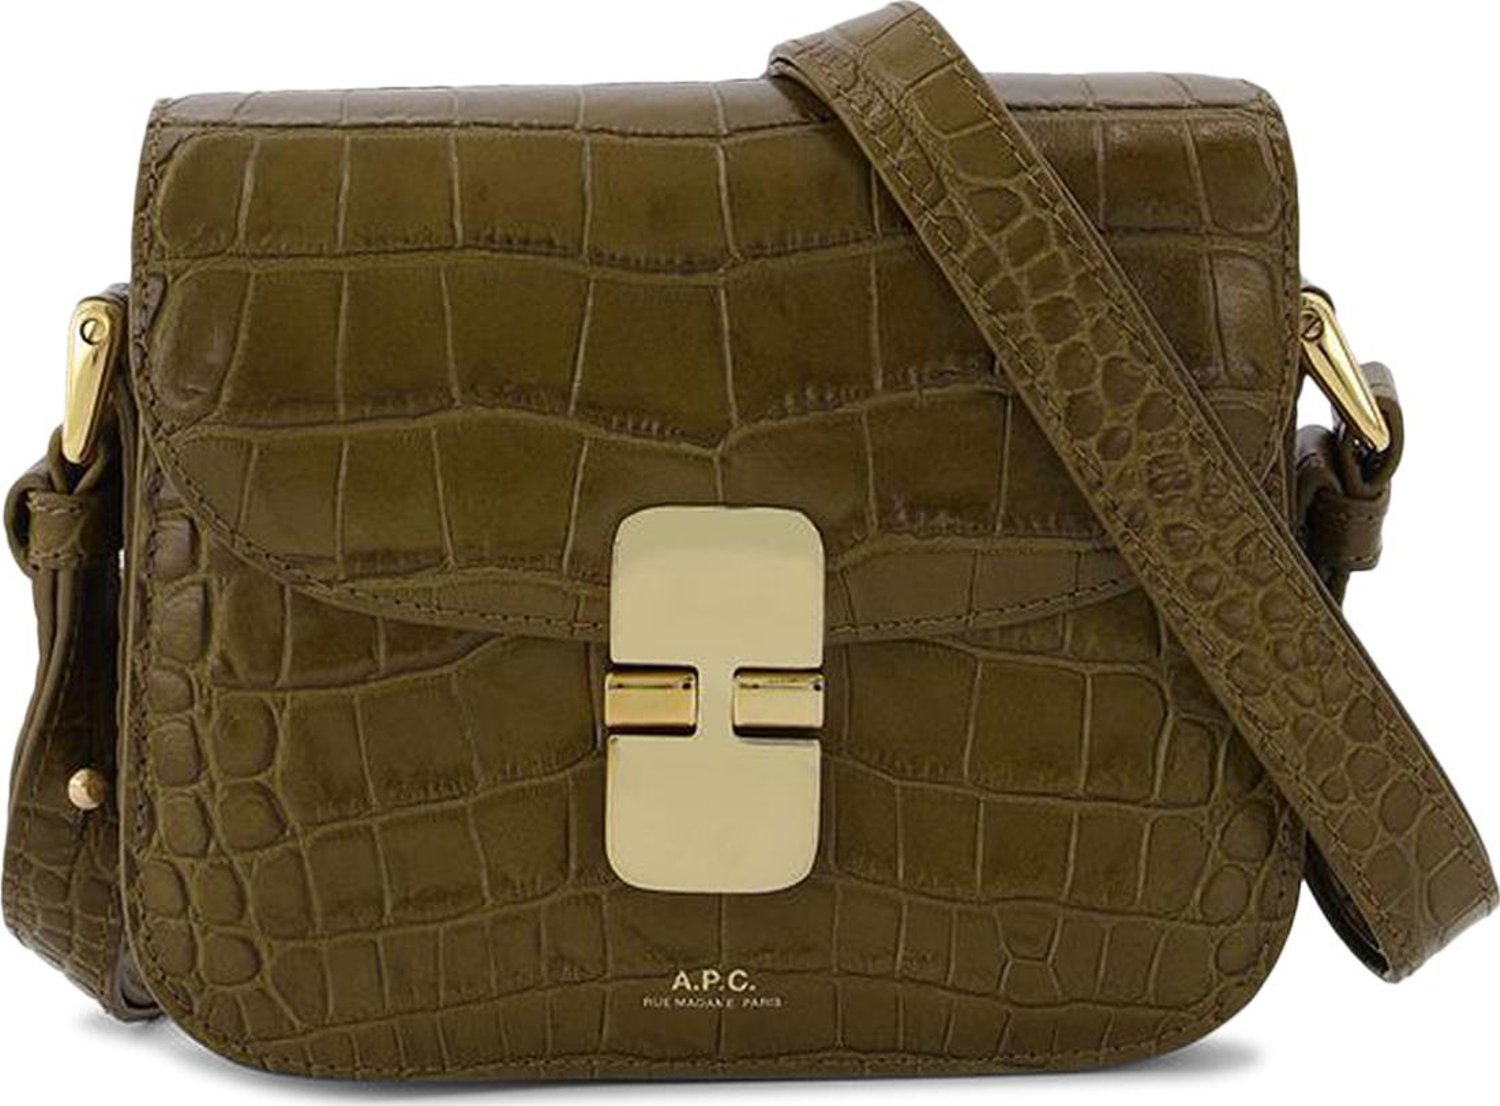 Buy A.P.C. Grace Mini Bag 'Olive Green' - PXBLJ F61515 OLIV | GOAT